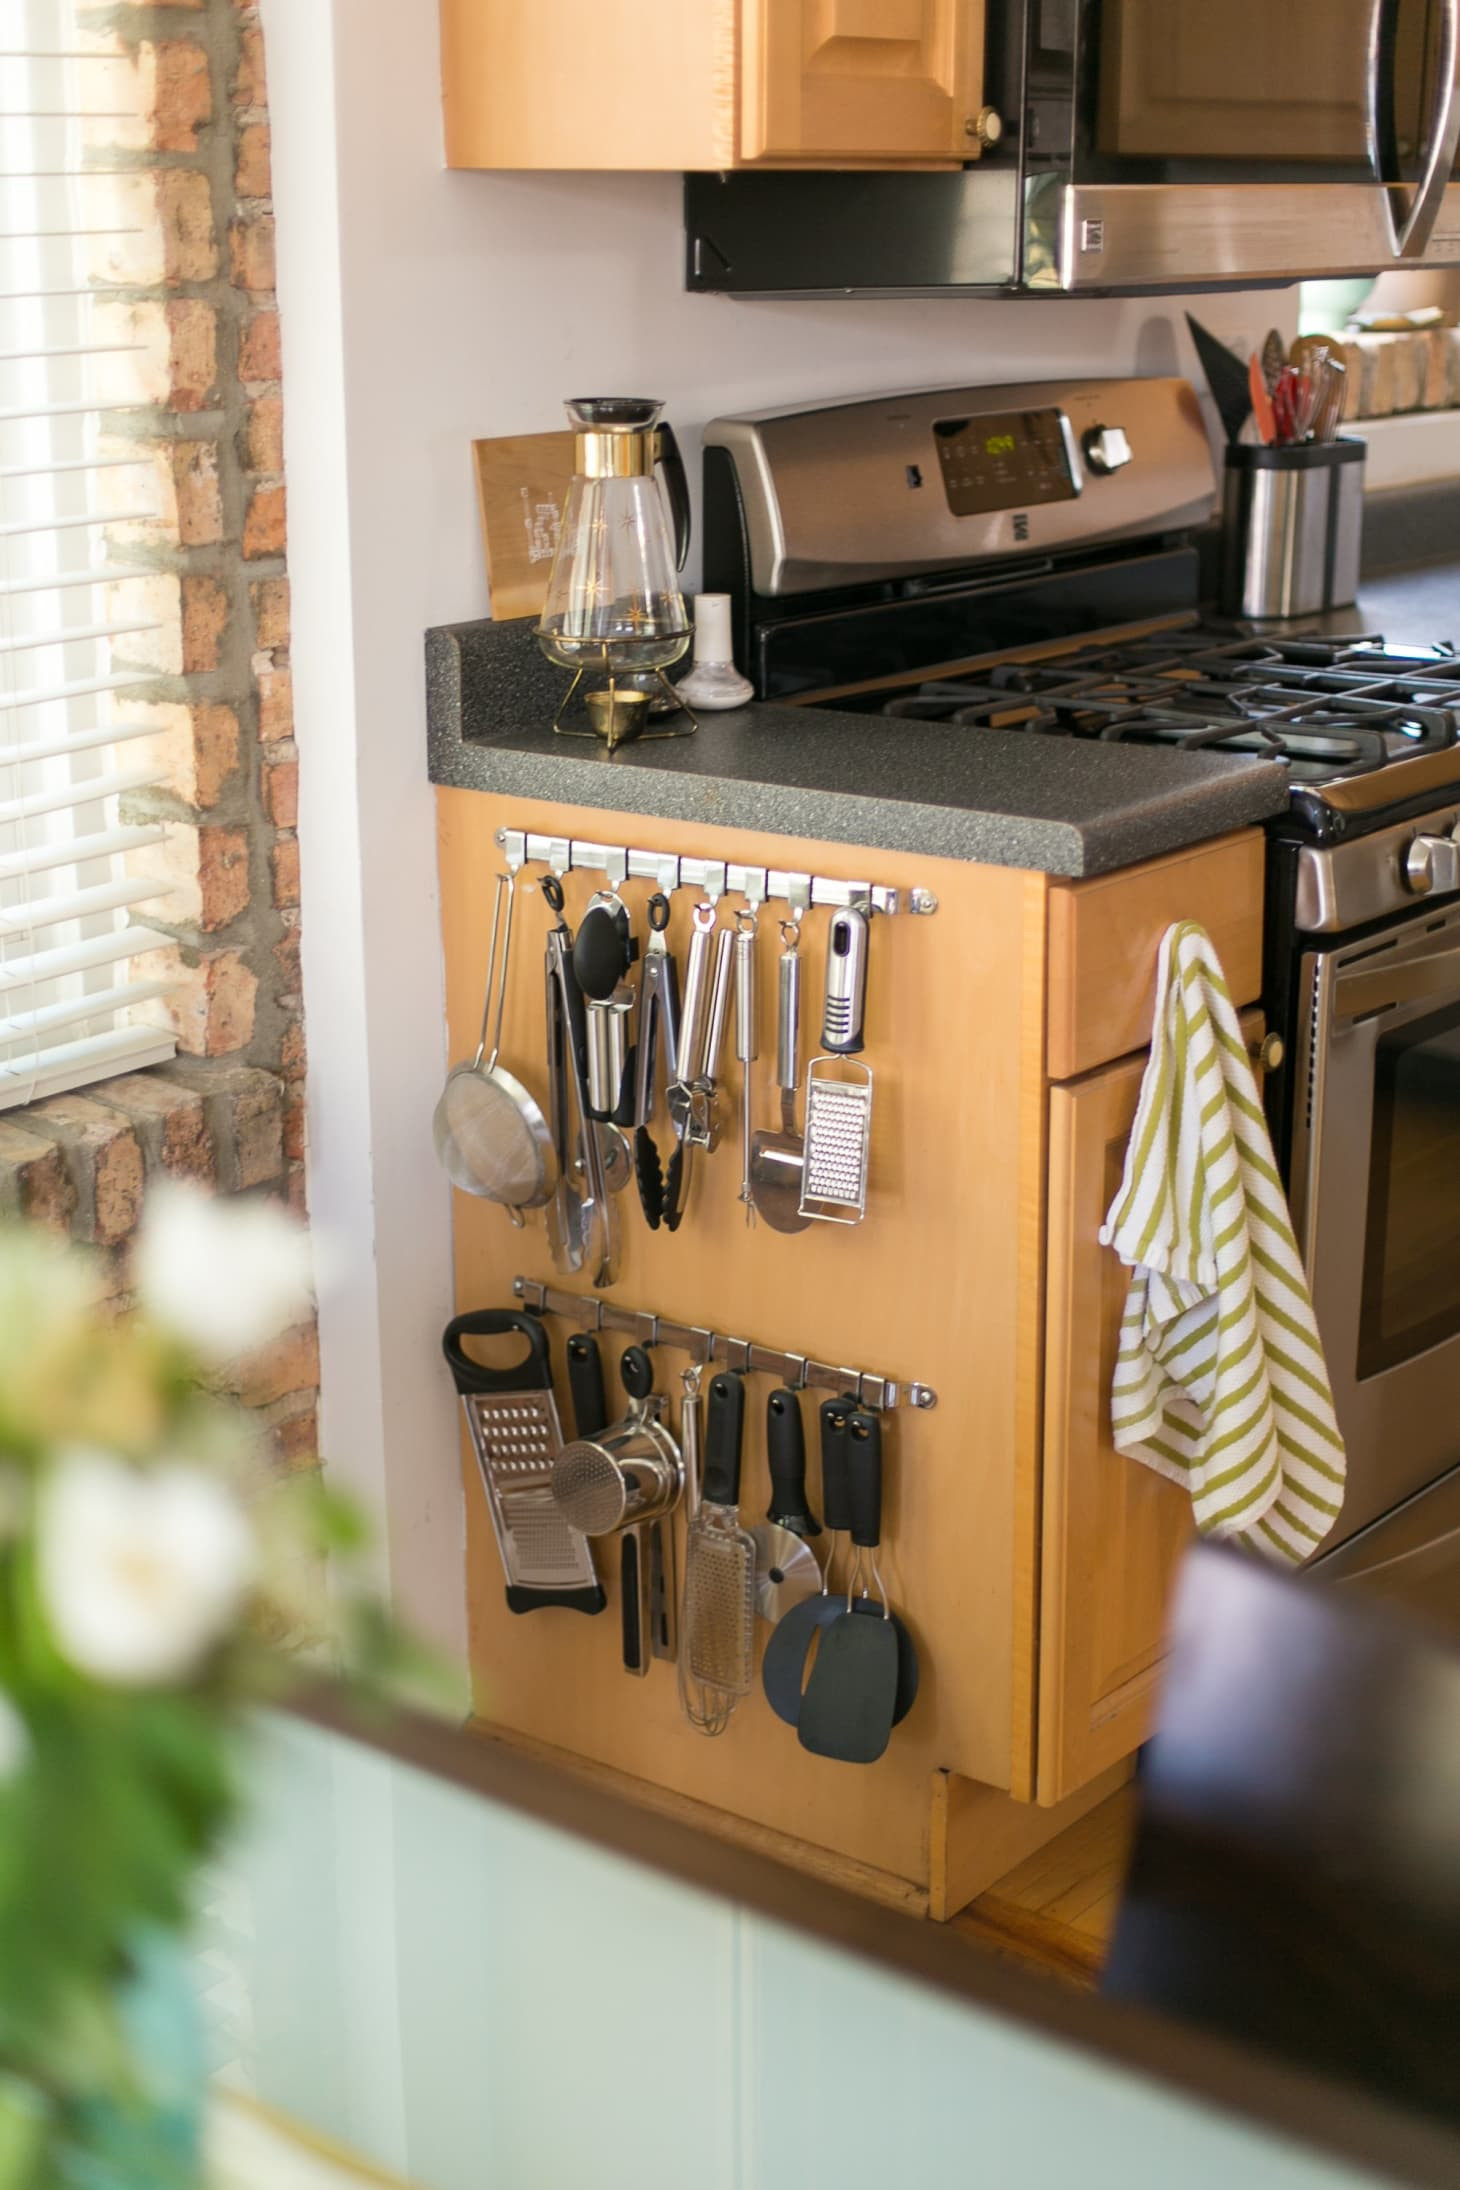 Small Apartment Kitchen Storage Ideas
 The 21 Best Storage Ideas for Small Kitchens